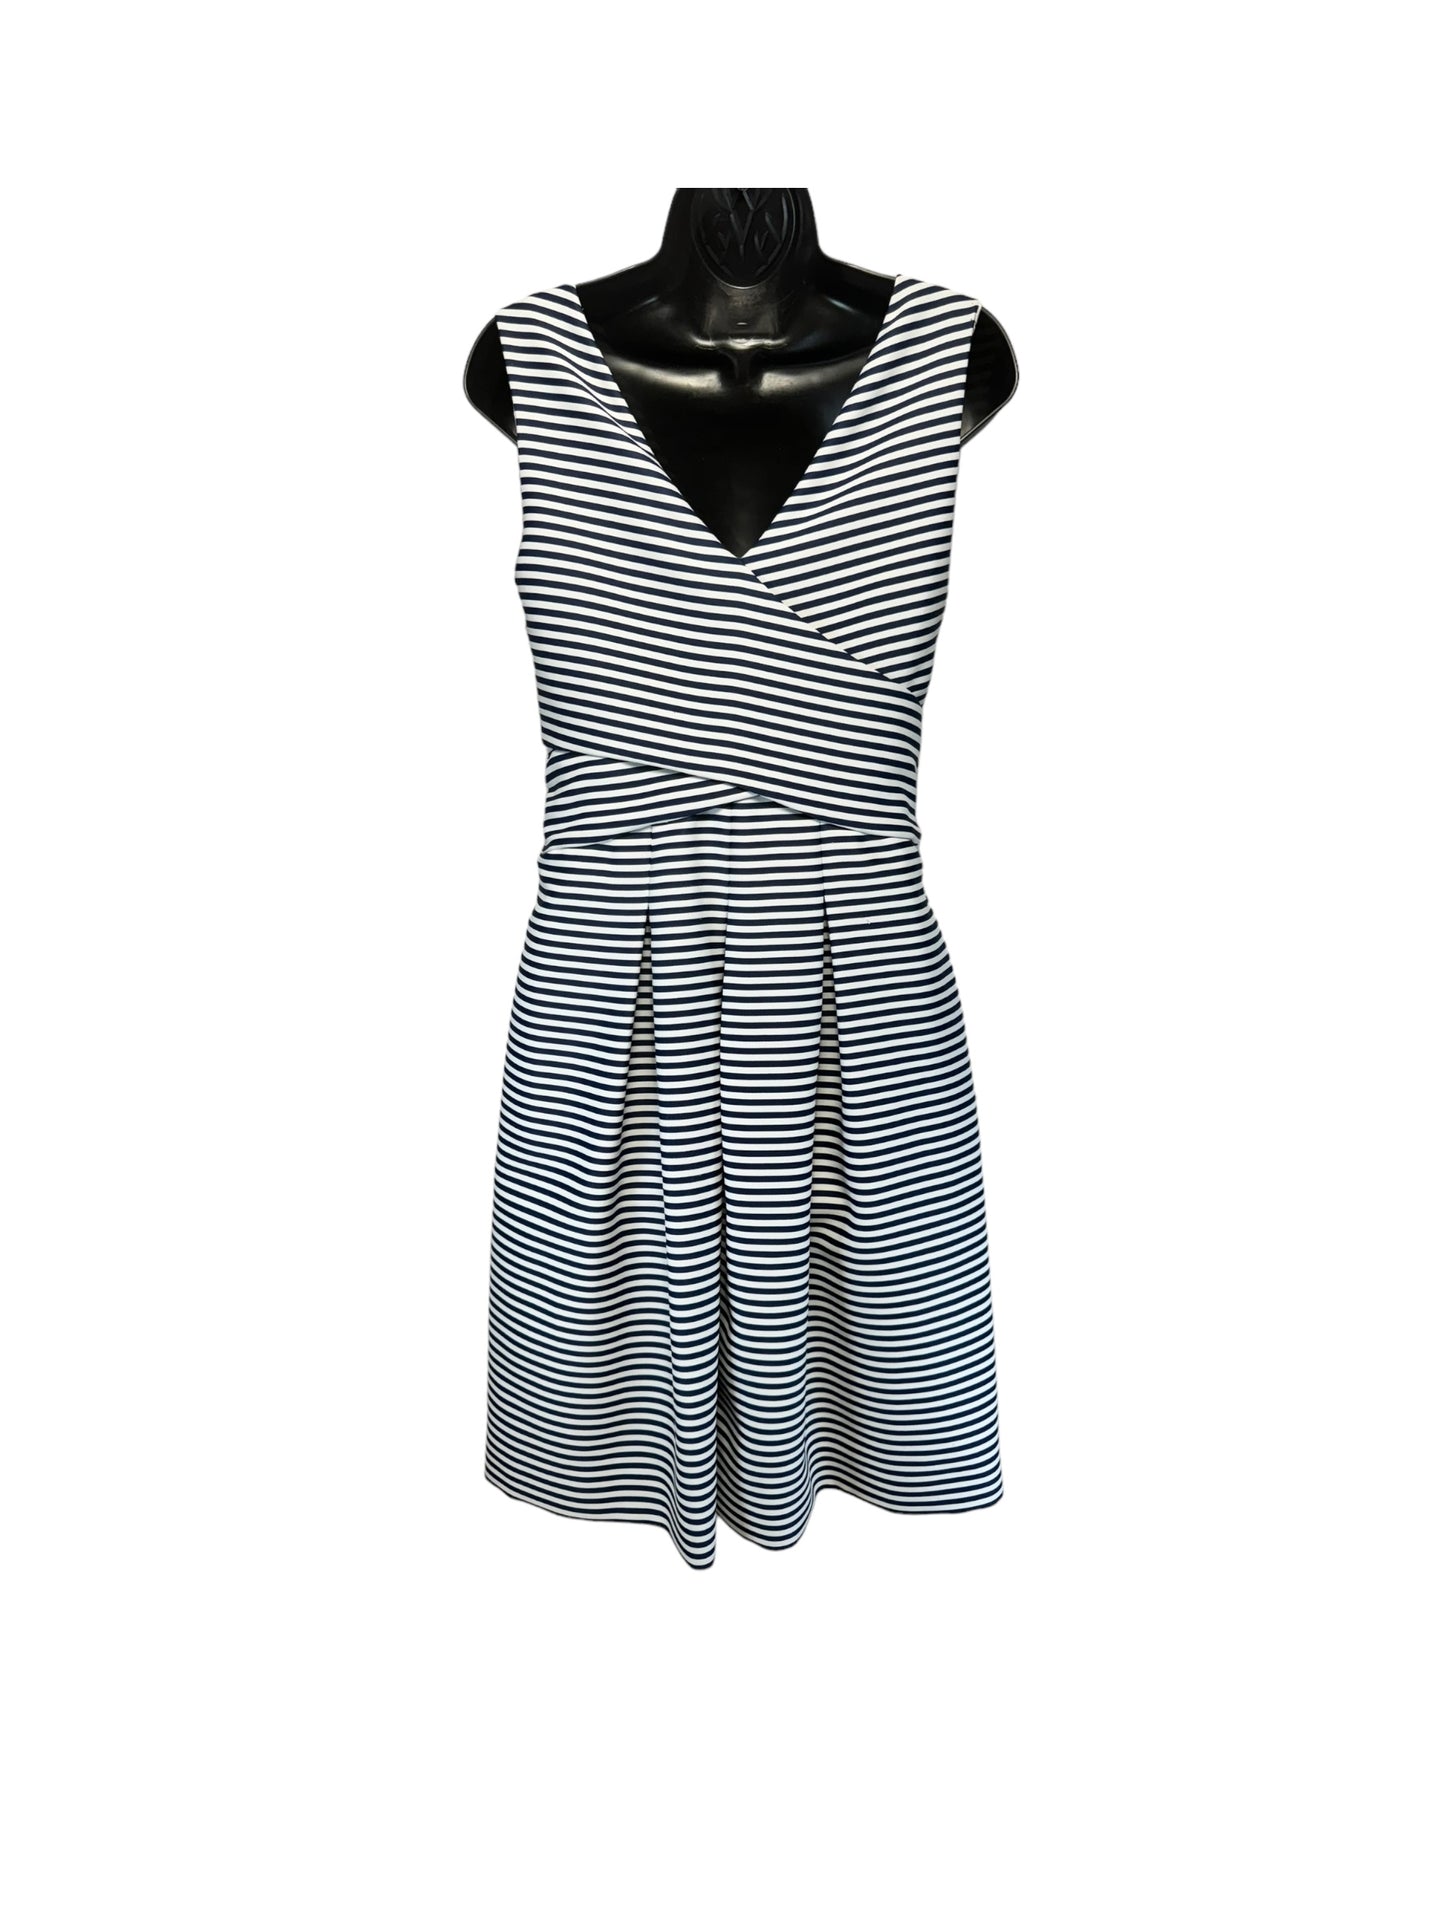 Bell Skirt Dress in Navy & Chalk Stripe Designer By Halston Heritage  Size: 6